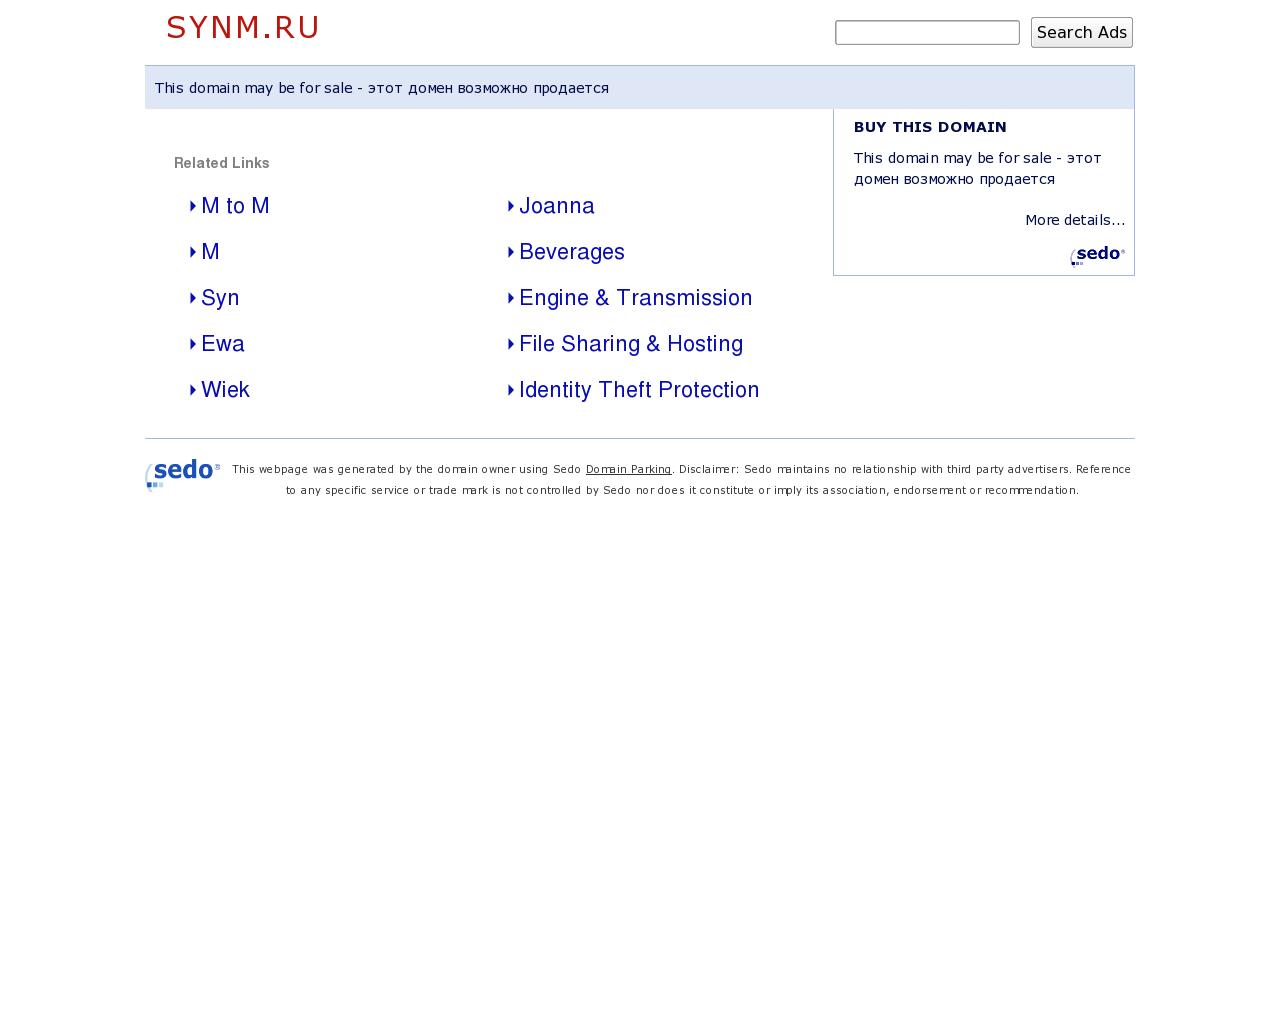 Изображение сайта synm.ru в разрешении 1280x1024